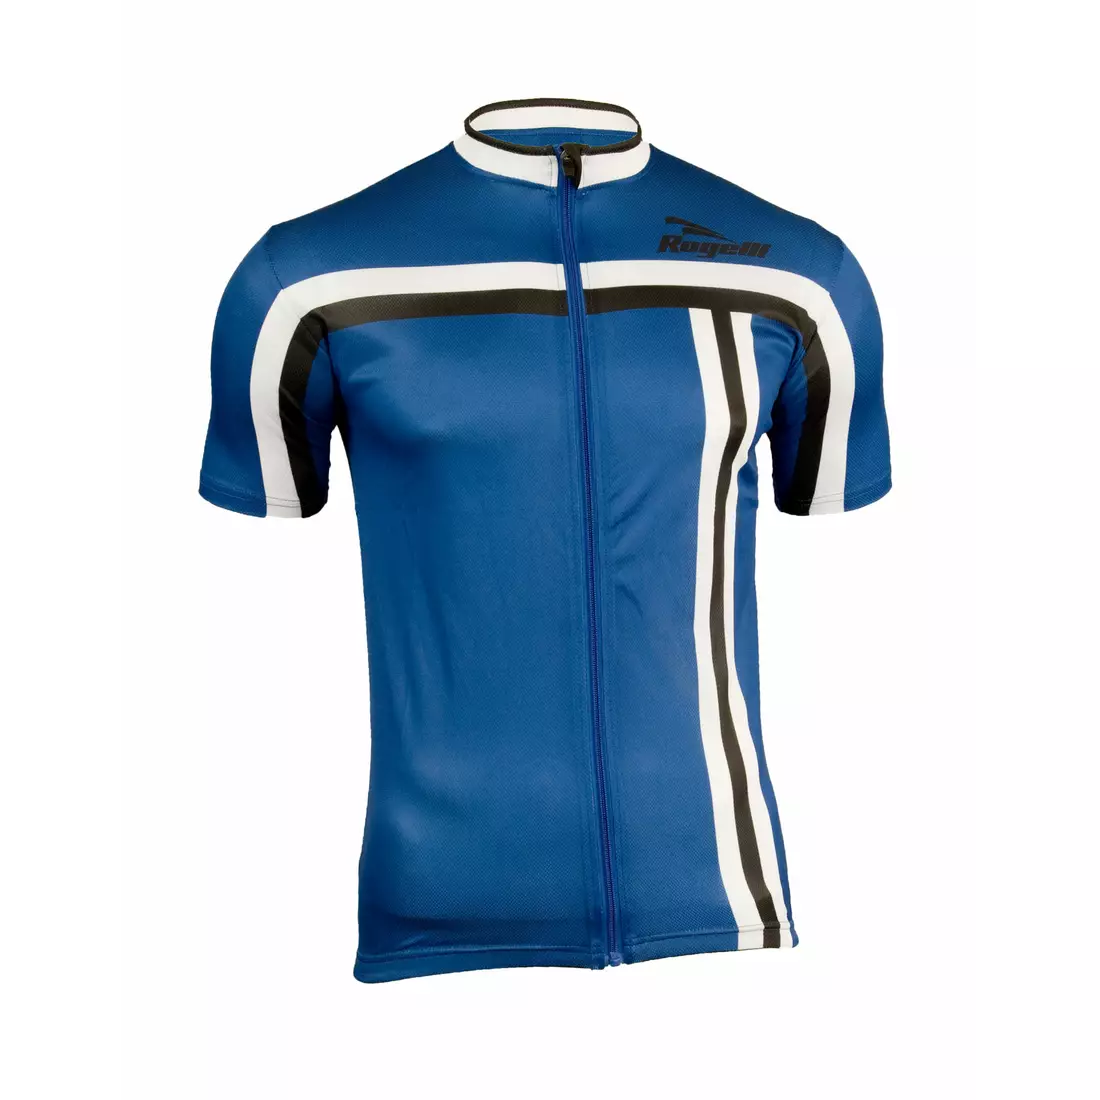 Tricou ciclist barbatesc ROGELLI BRESCIA 001.065, Albastru